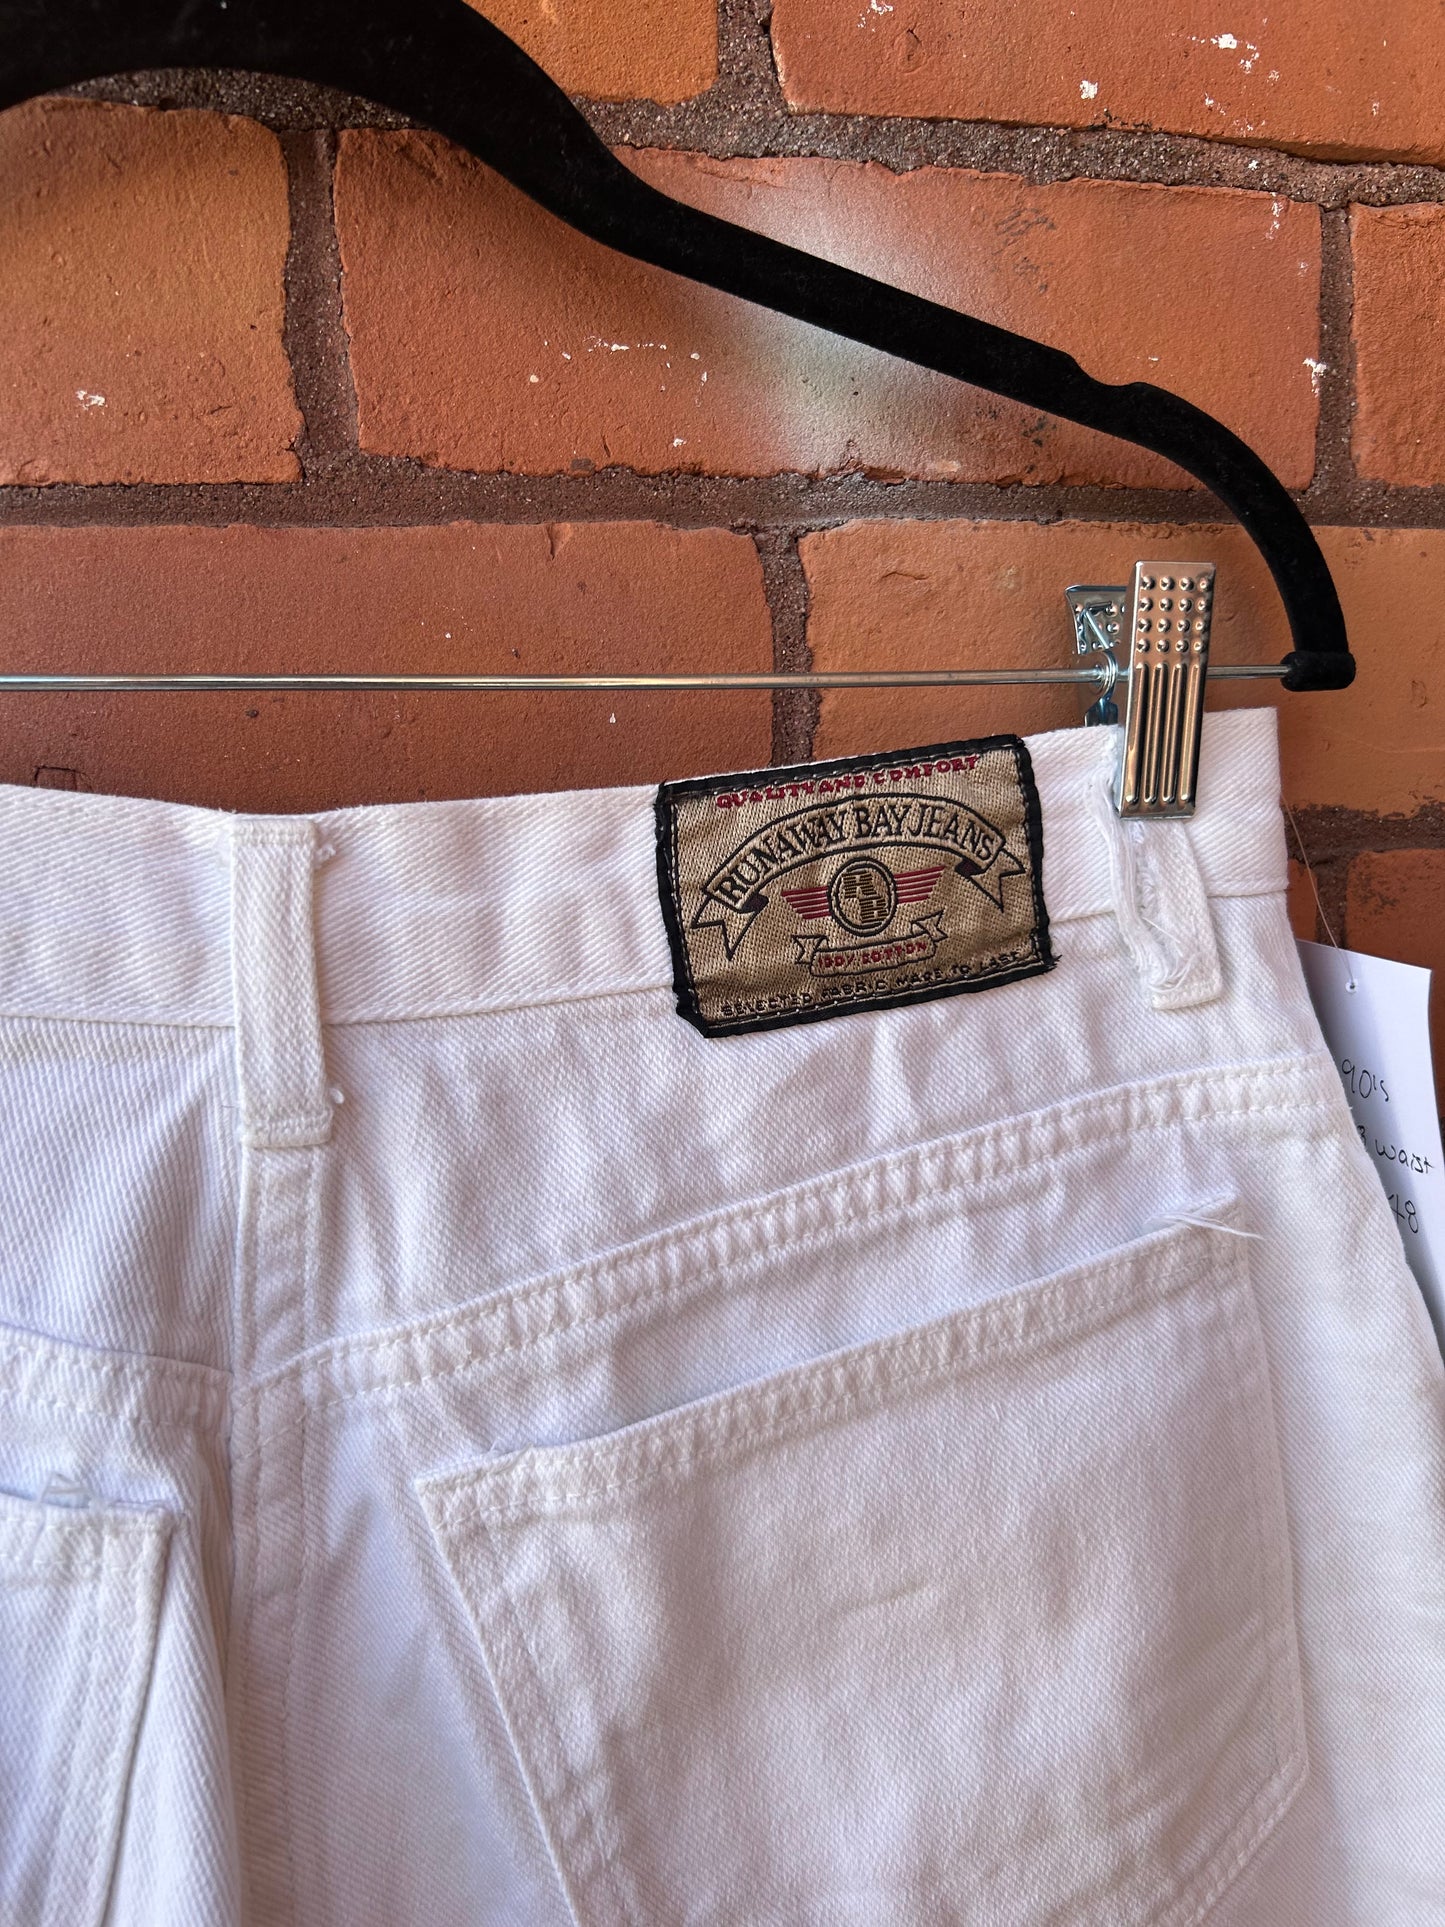 90’s Vintage White Denim Shorts / 28 Waist